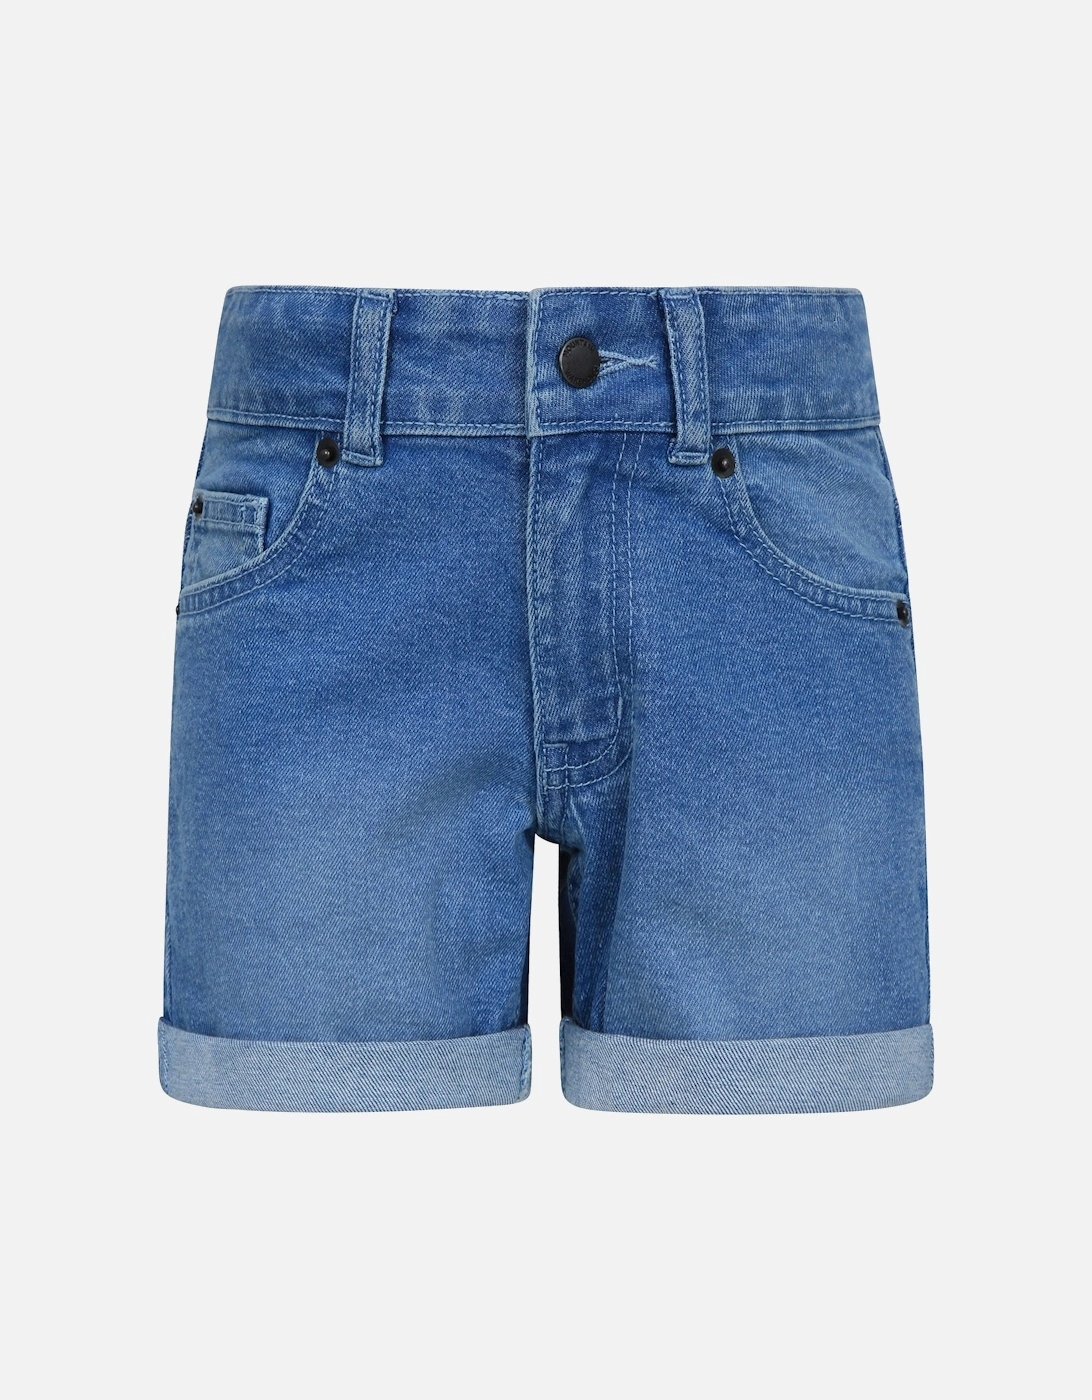 Childrens/Kids Denim Shorts, 5 of 4